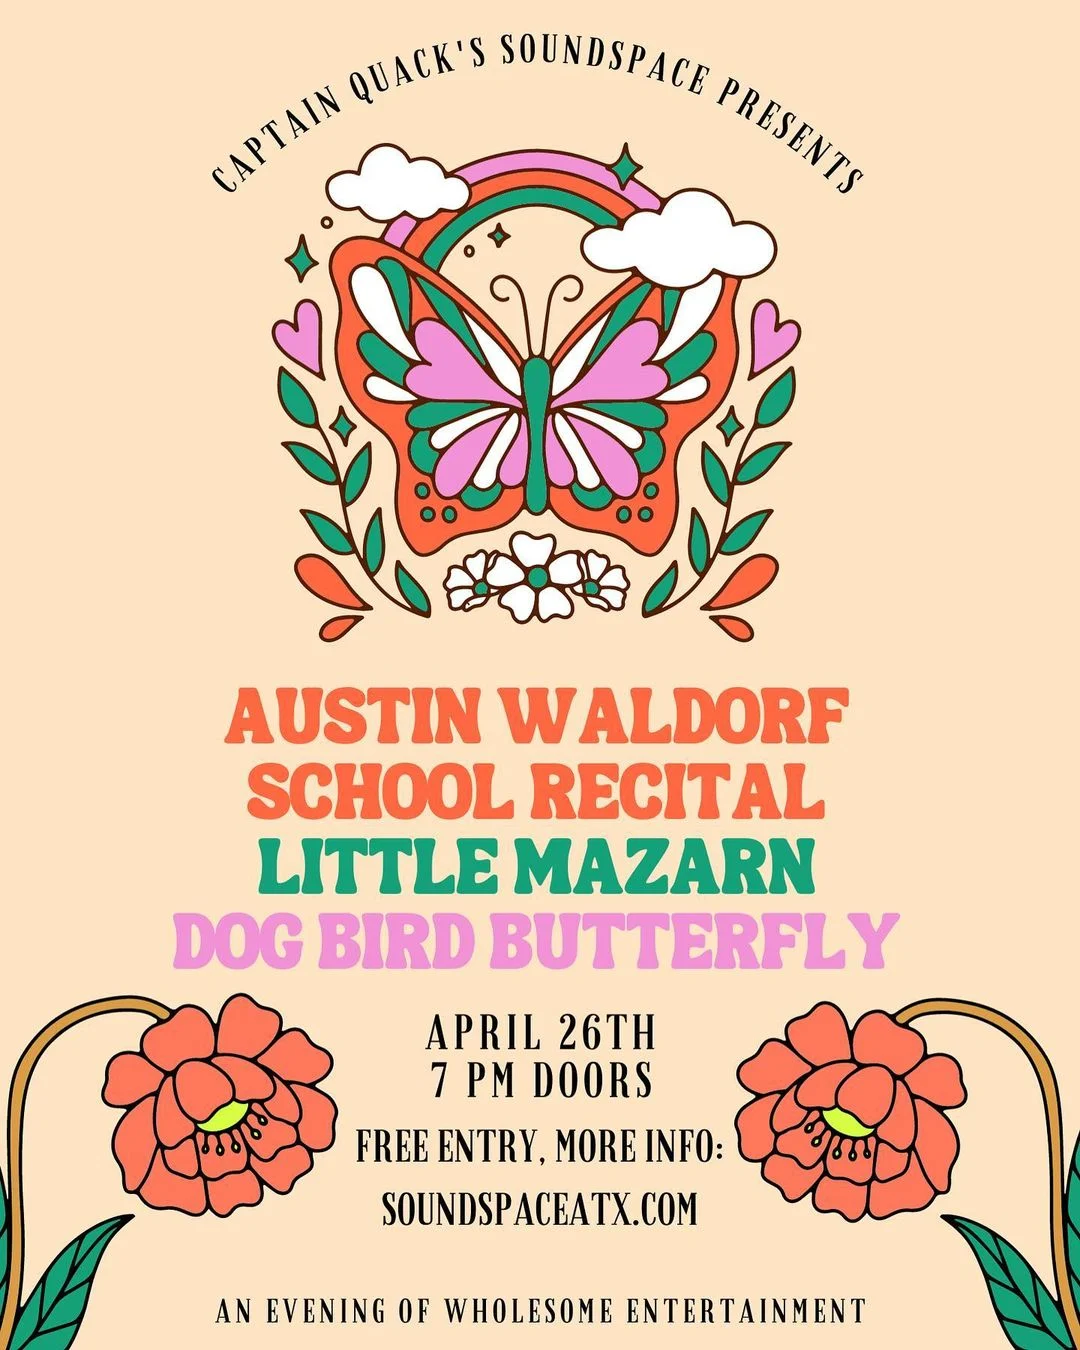 Austin Waldorf School Recital, Little Mazarn, and Dog Bird Butterfly, April 26, 2023 at Soundspace at Captain Quackenbush's Bakery.